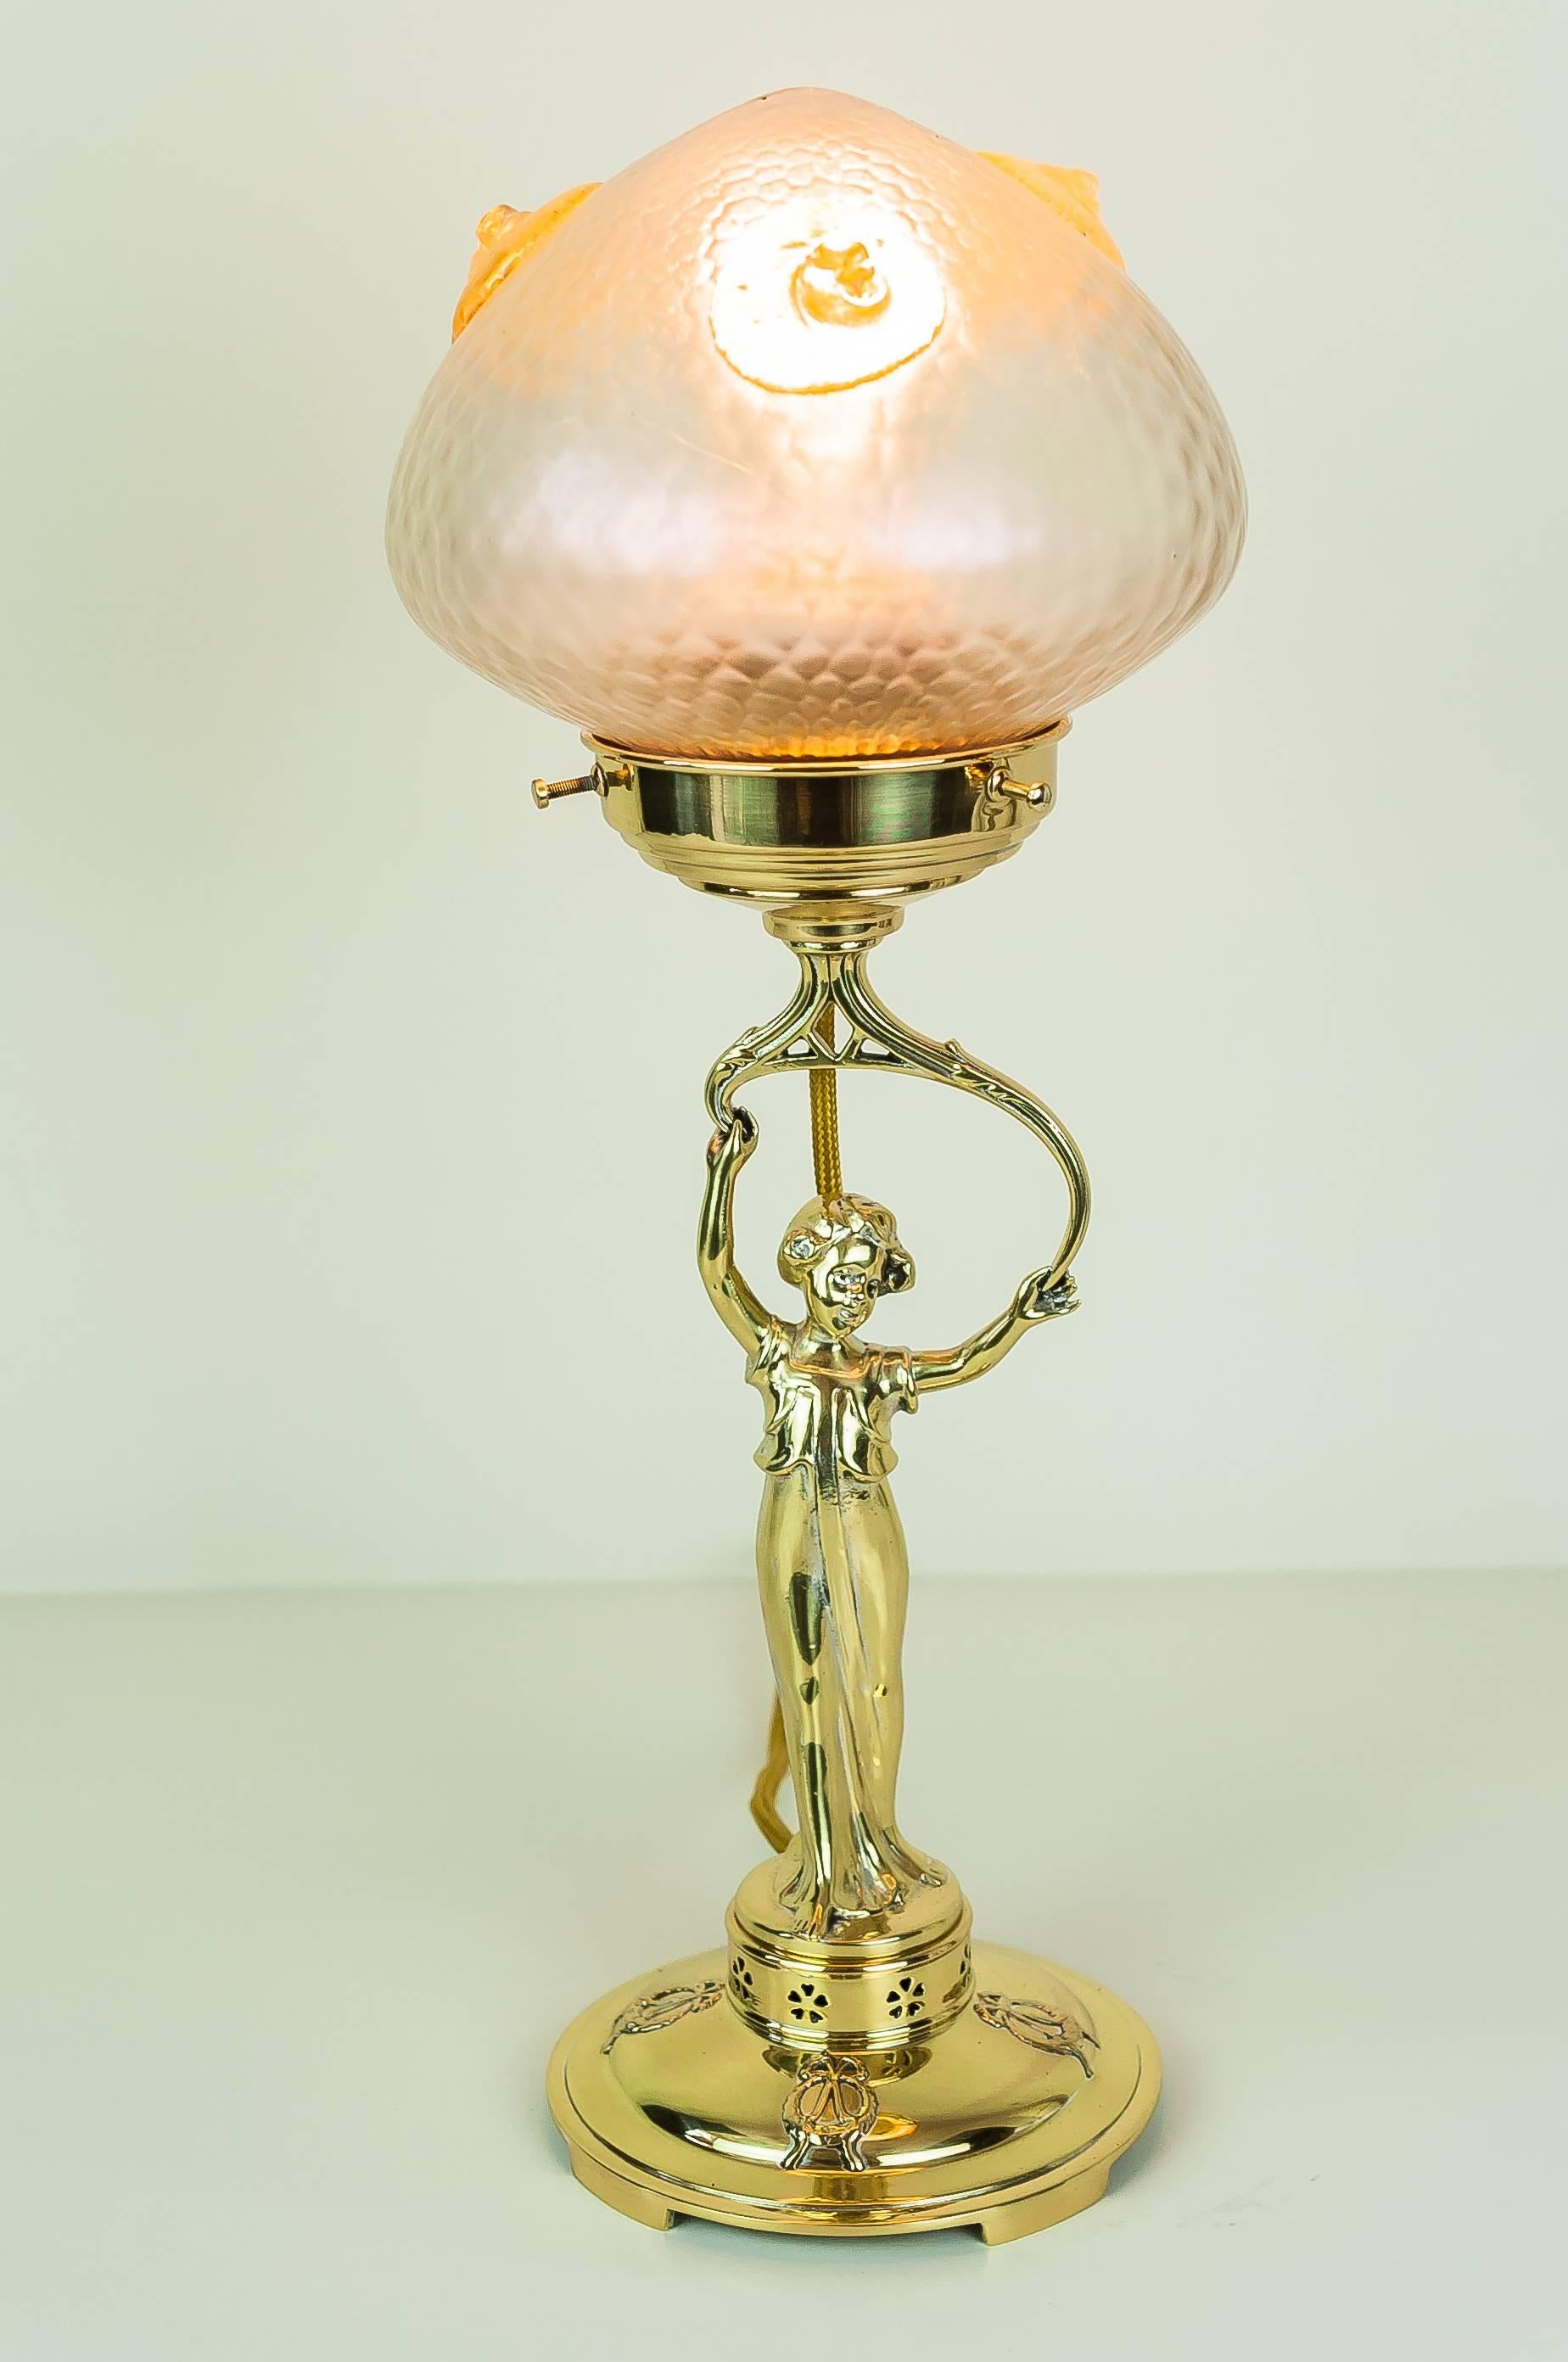 Jugendstil table lamp with Loetz glass shade
Polished and stove enamelled.